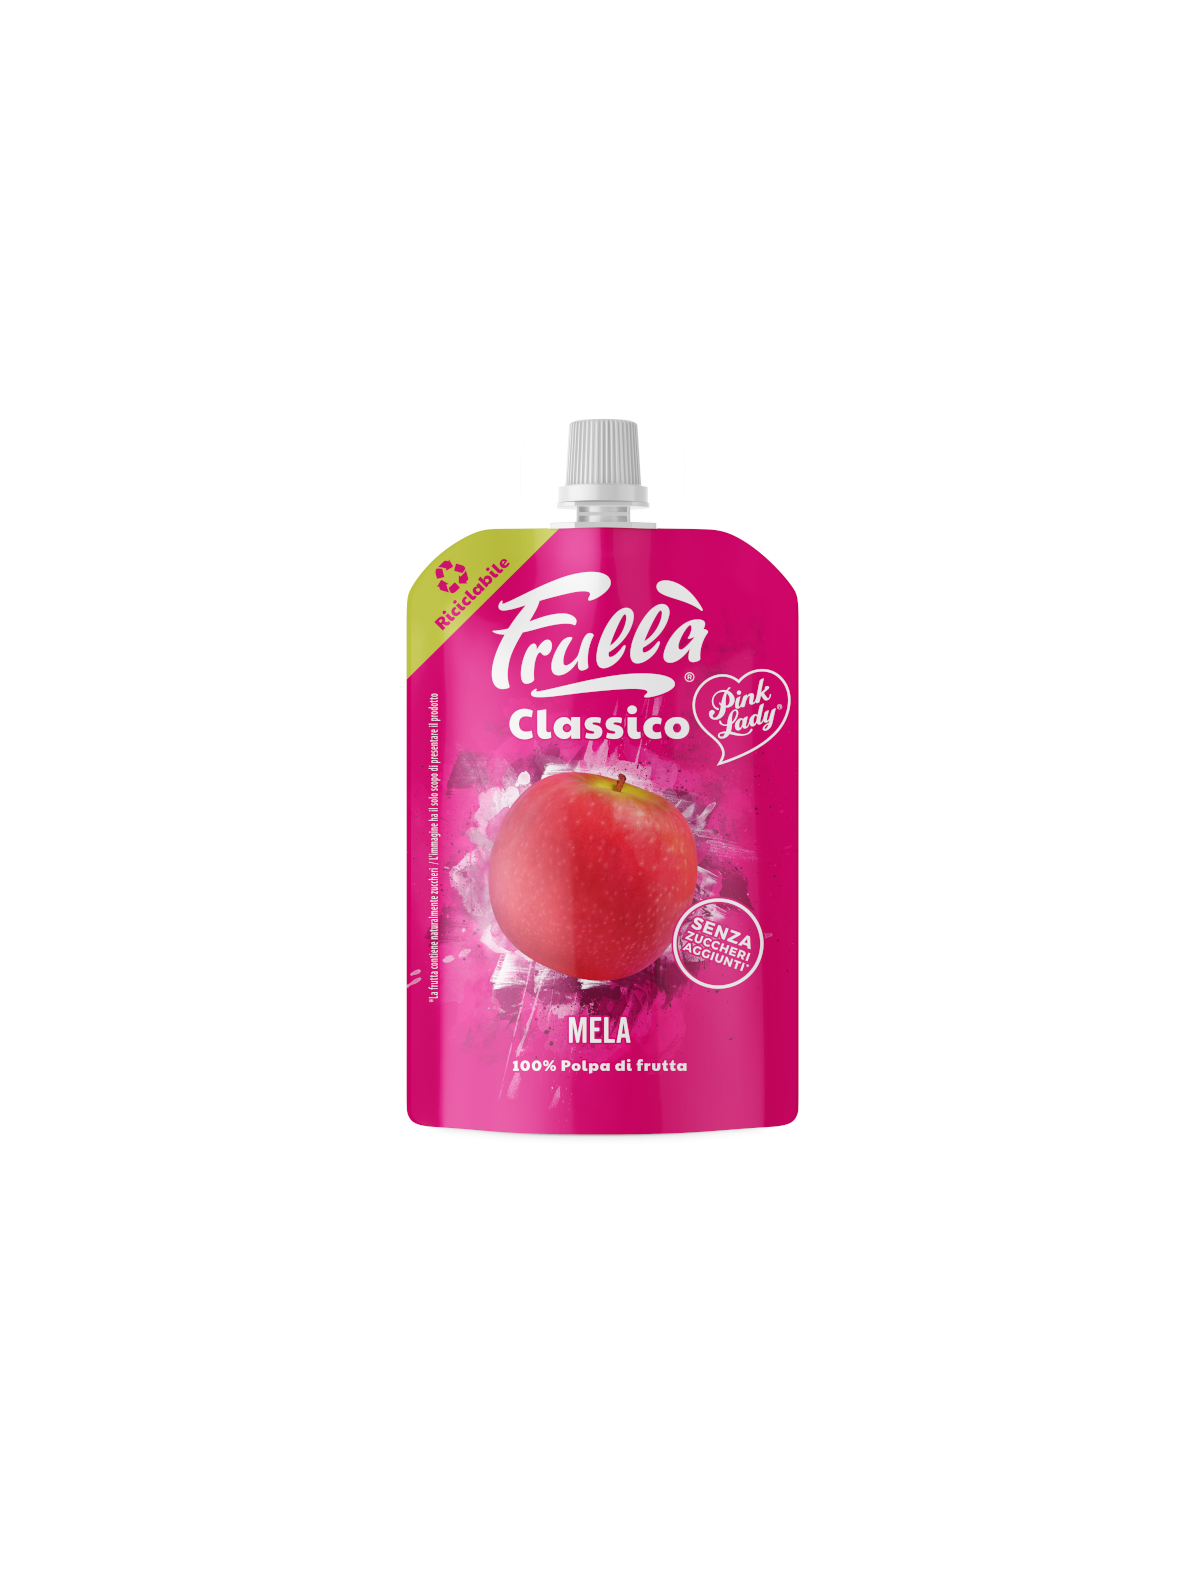 Natura nuova - frulla' classico mela pink lady 100g - Frullà